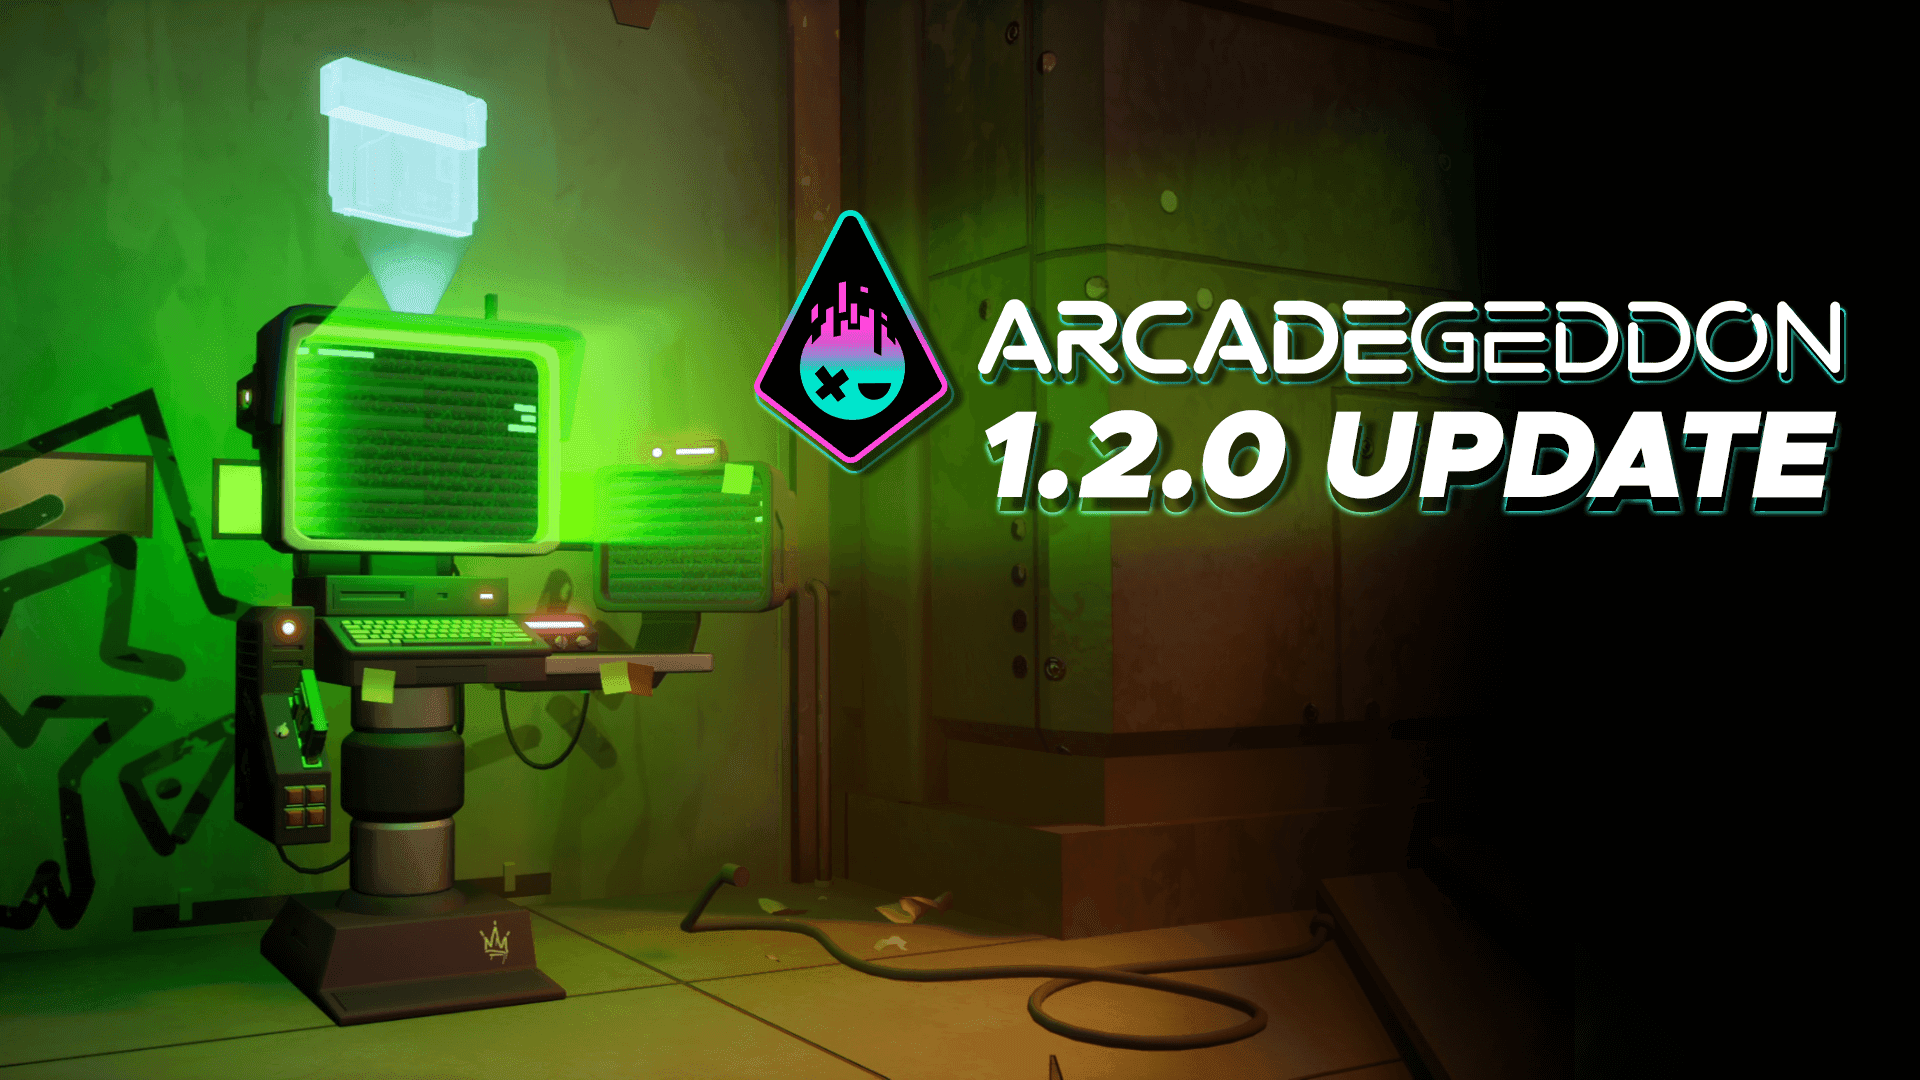 Arcadegeddon Update 1.2.0